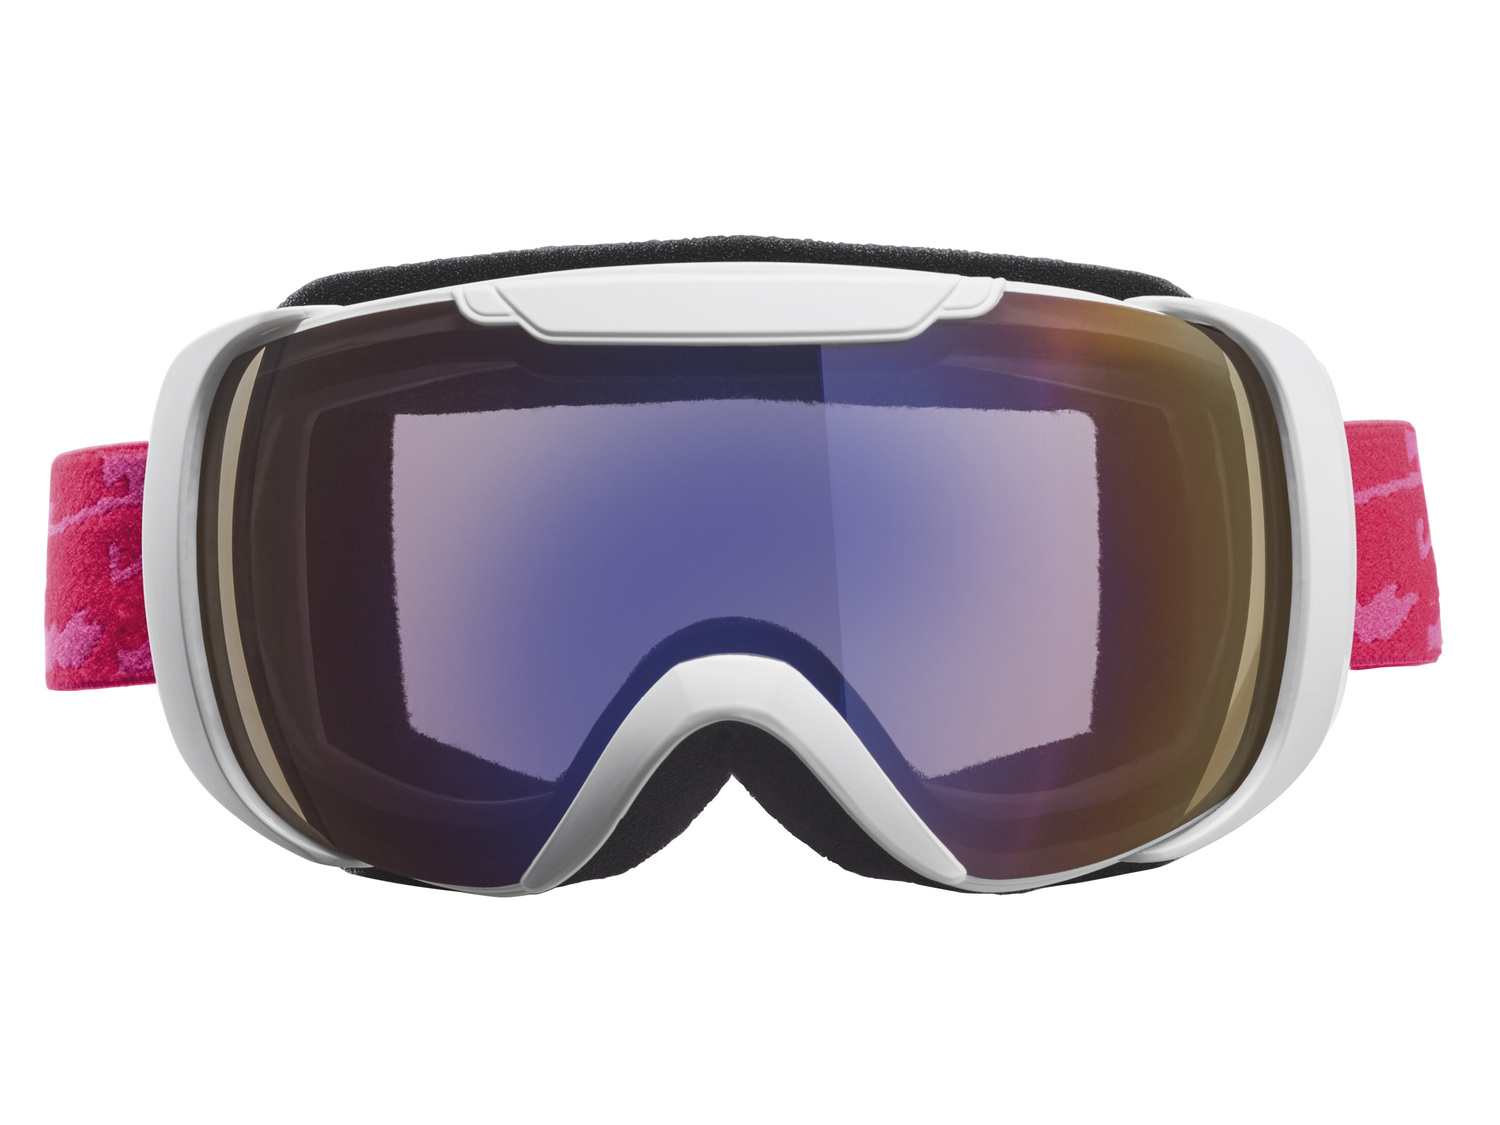 Gogle Crivit, cena 39,99 PLN 
Akcesoria na narty i snowboard!
- 100% ochrony UV, ...